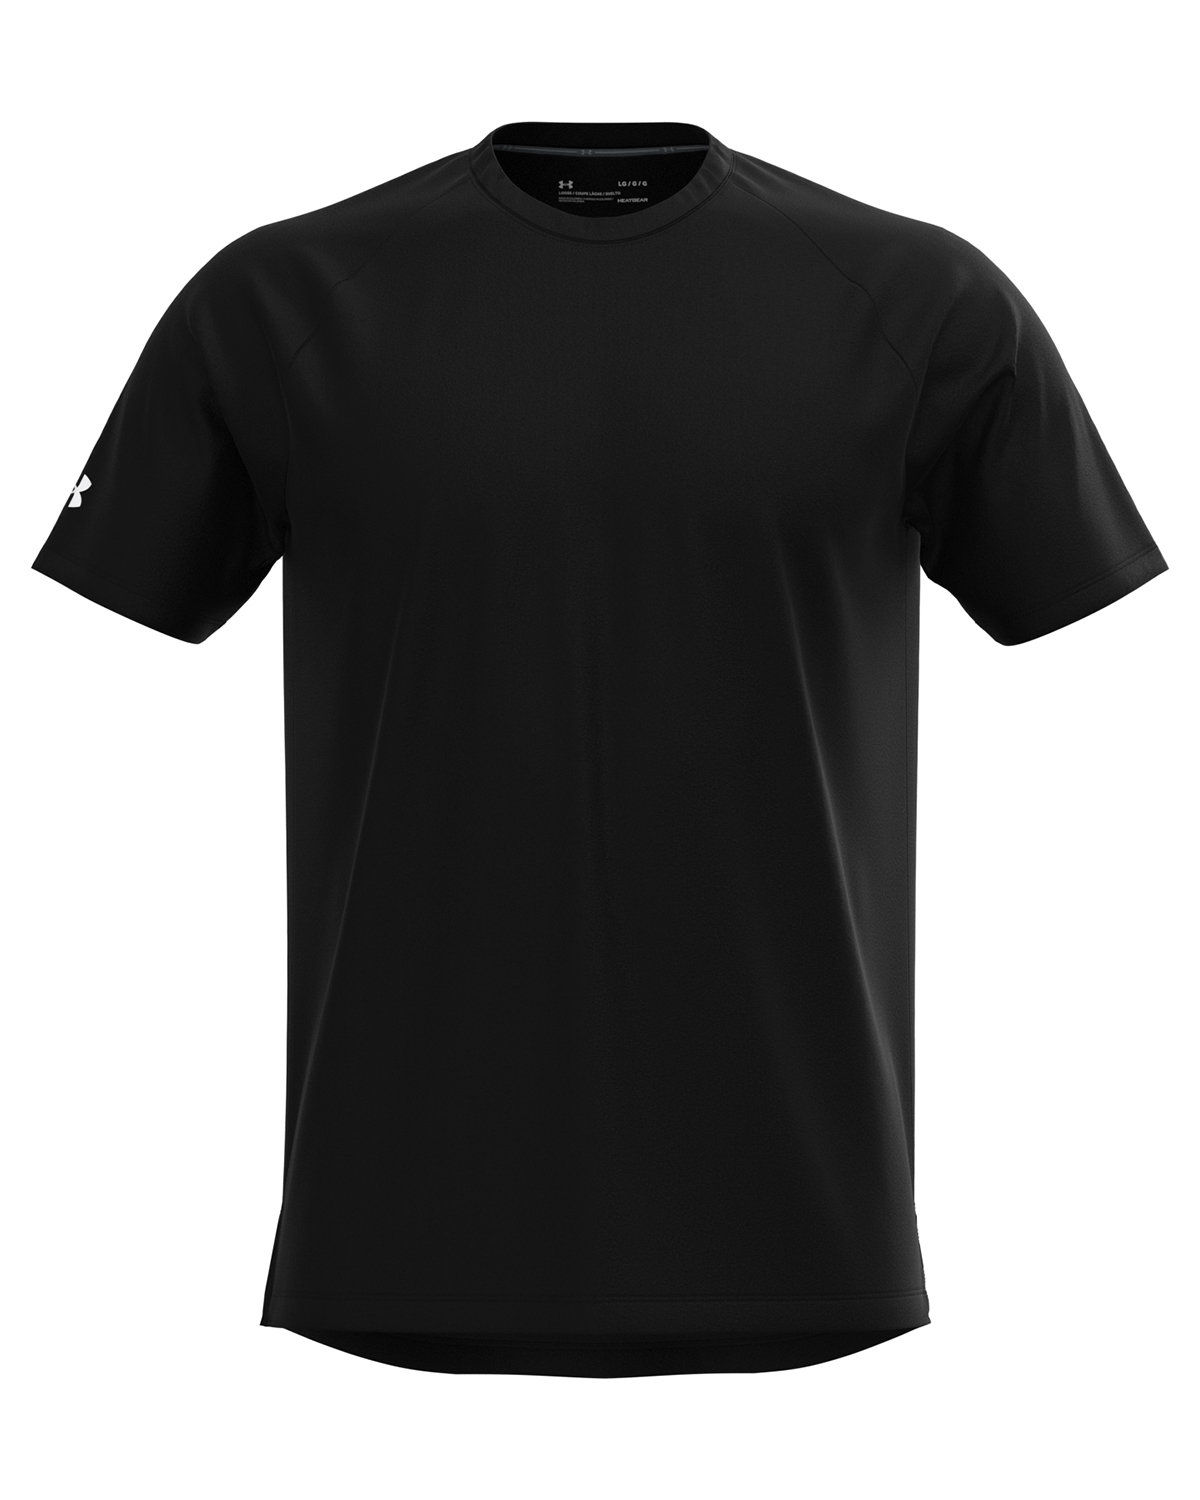 Custom Under Armour T-Shirts  Design Under Armour T-Shirts